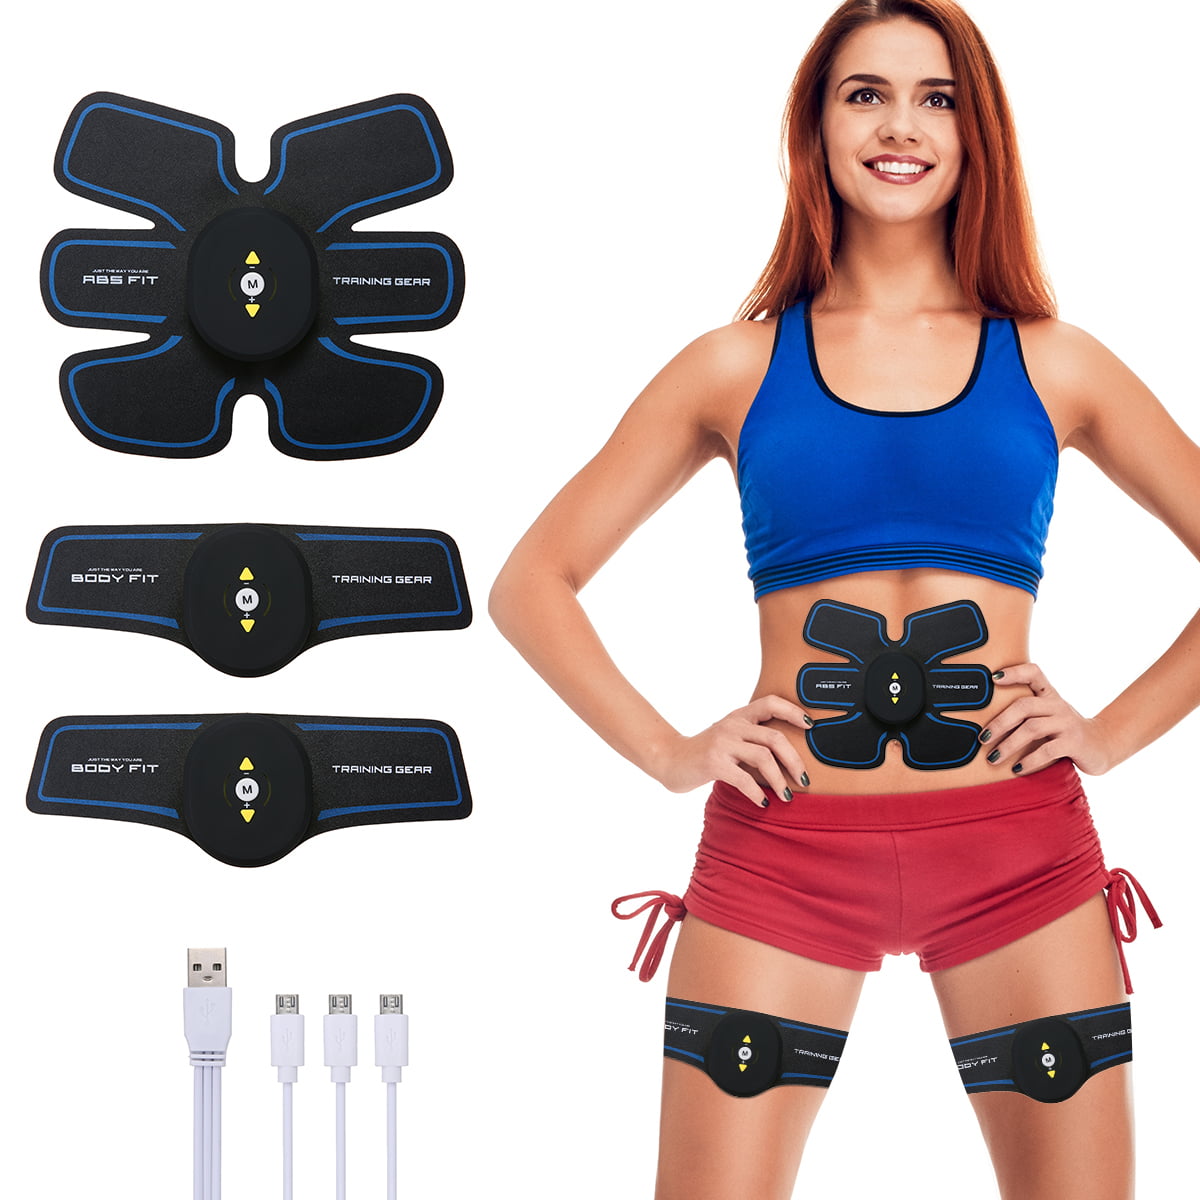 Abs Toner Muscle Stimulation Abdominal Toning Belt Kit Waist Slimming Stimulator 